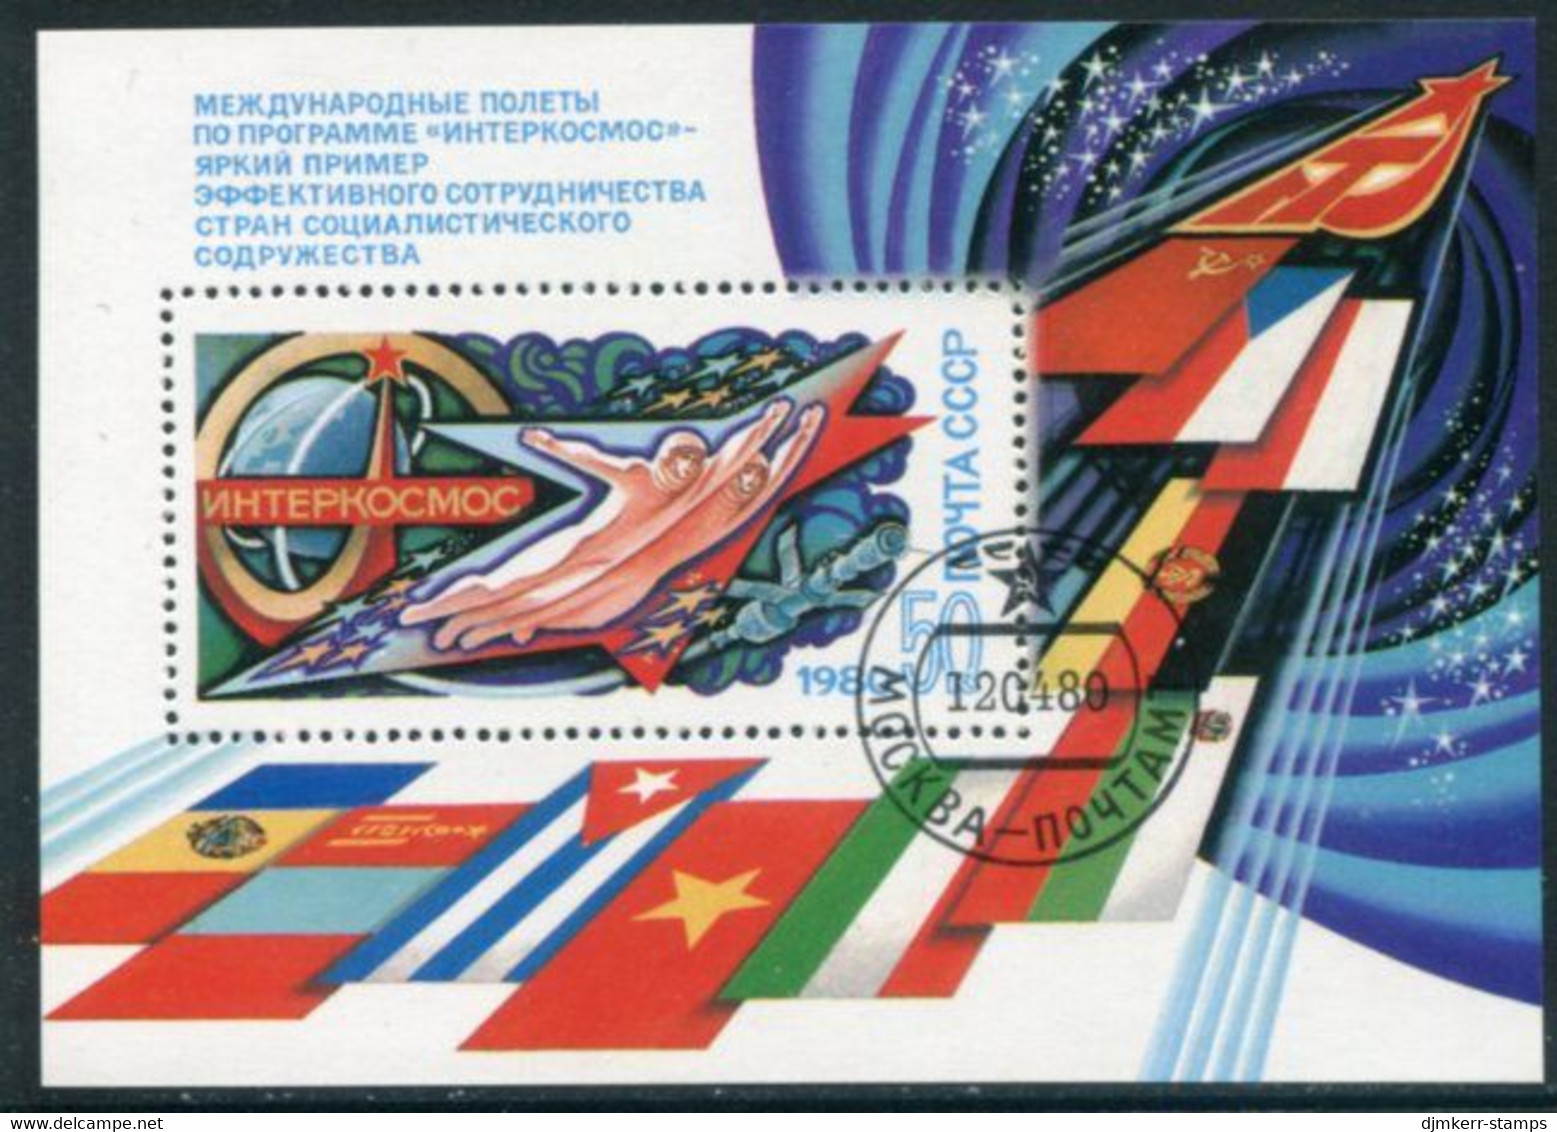 SOVIET UNION 1980 Intercosmos Programme Block Used.  Michel Block 146 - Used Stamps